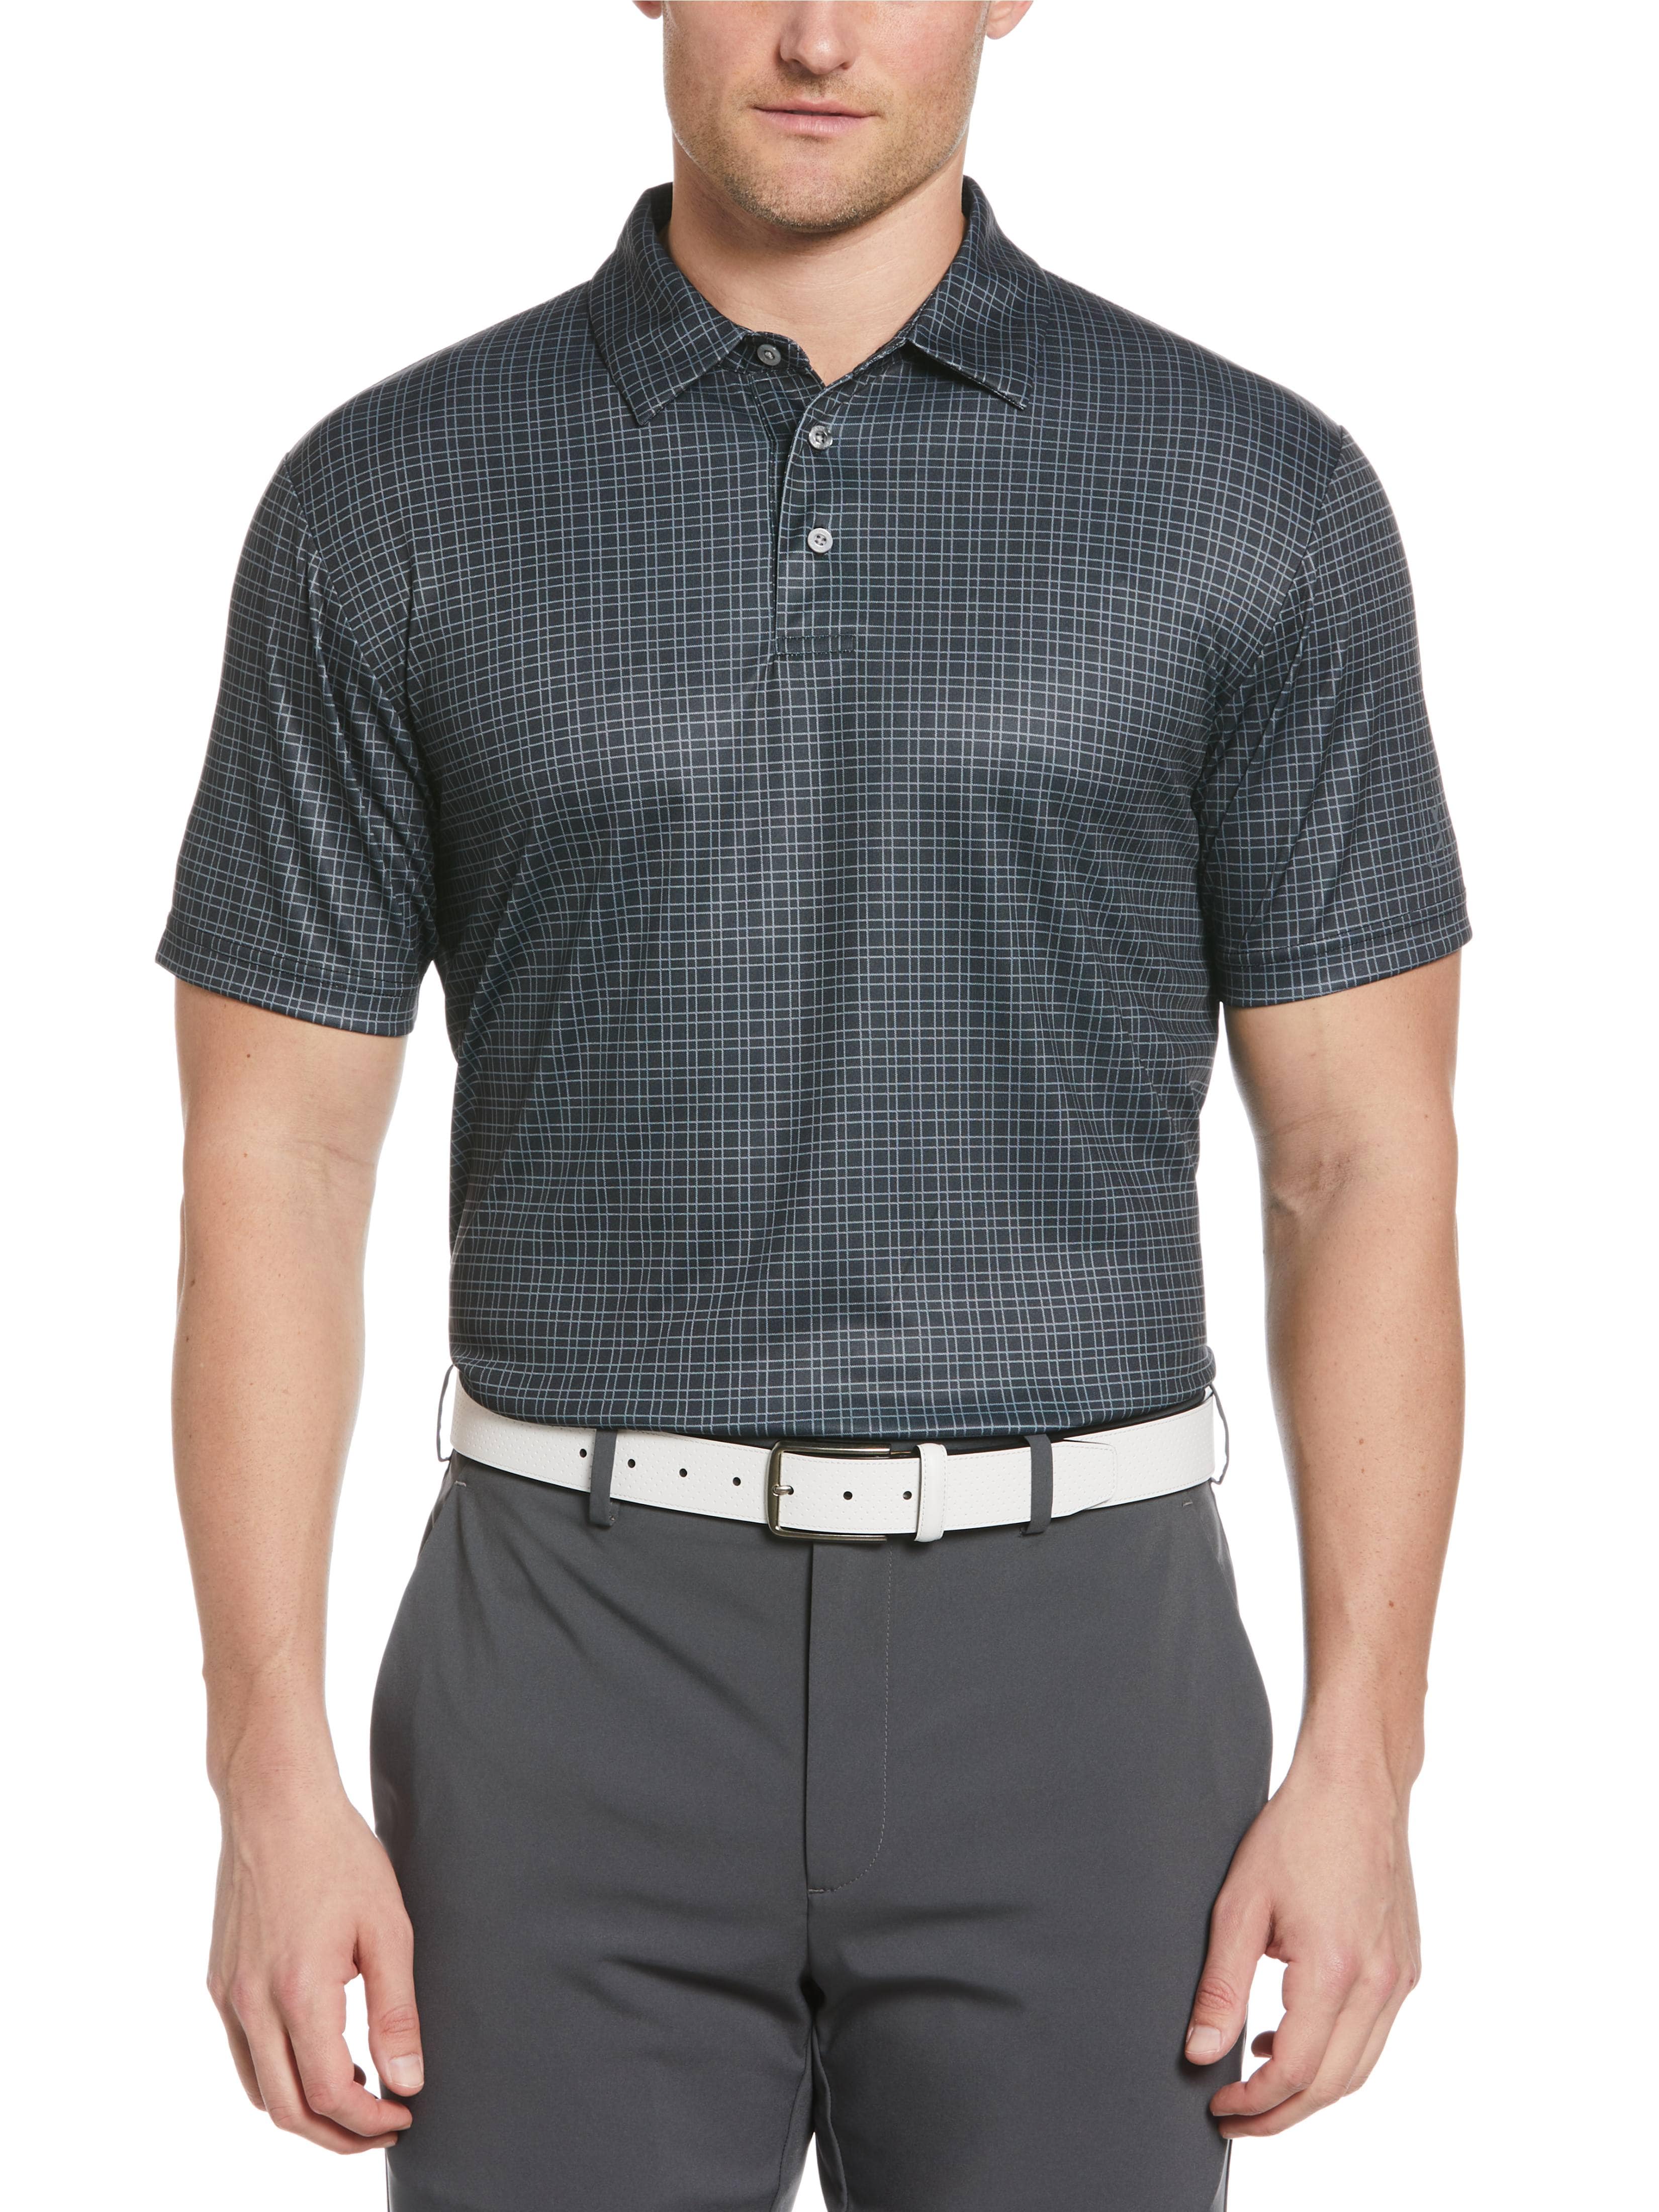 PGA TOUR Apparel Mens Menswear Print Golf Polo Shirt, Size Large, Black, 100% Polyester | Golf Apparel Shop